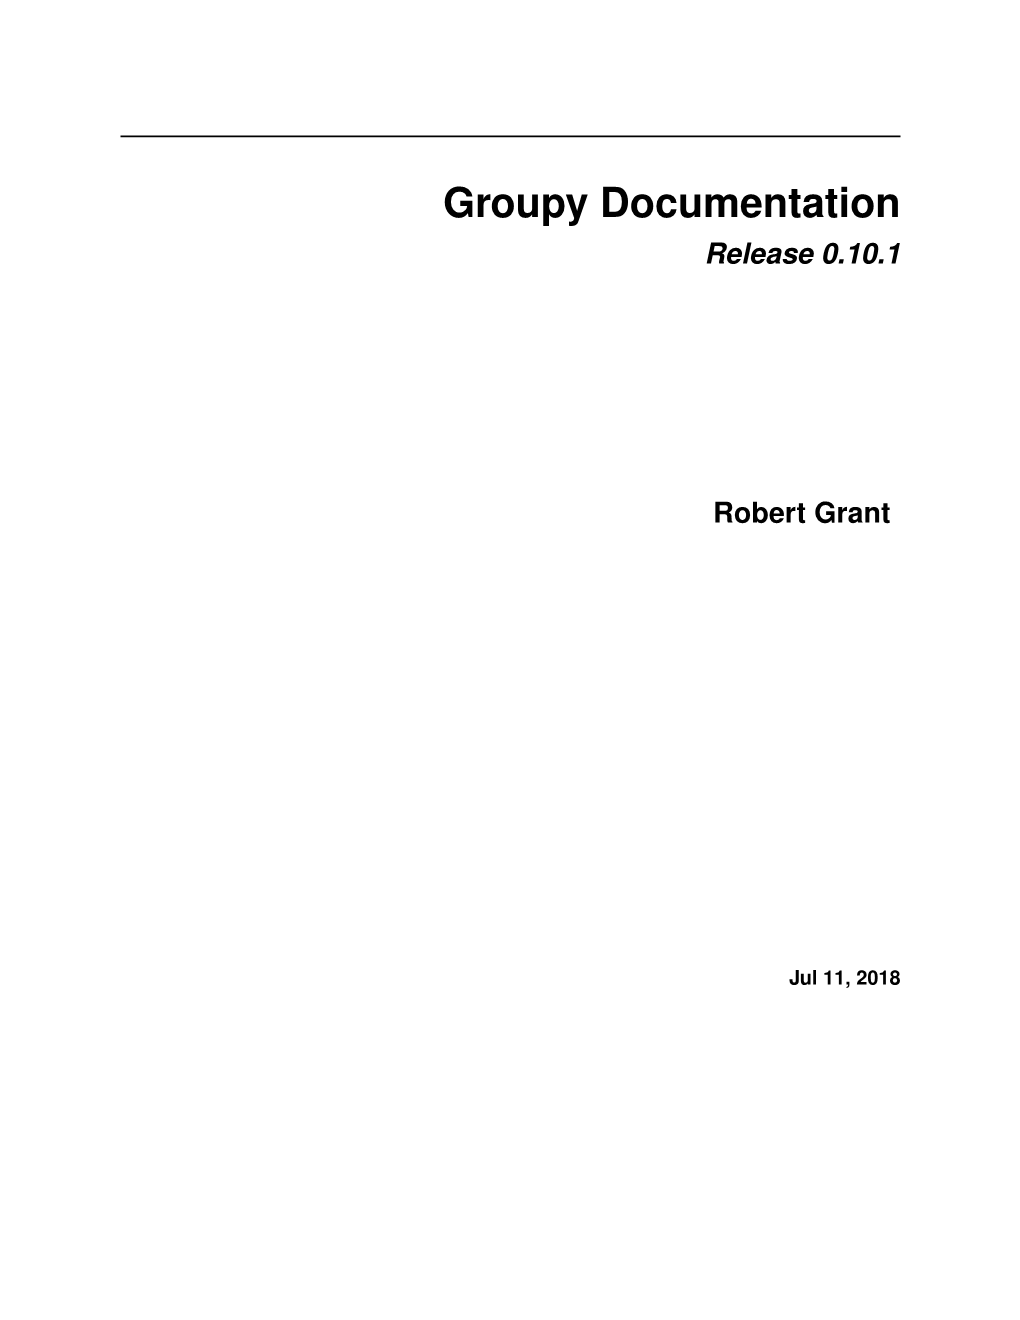 Groupy Documentation Release 0.10.1